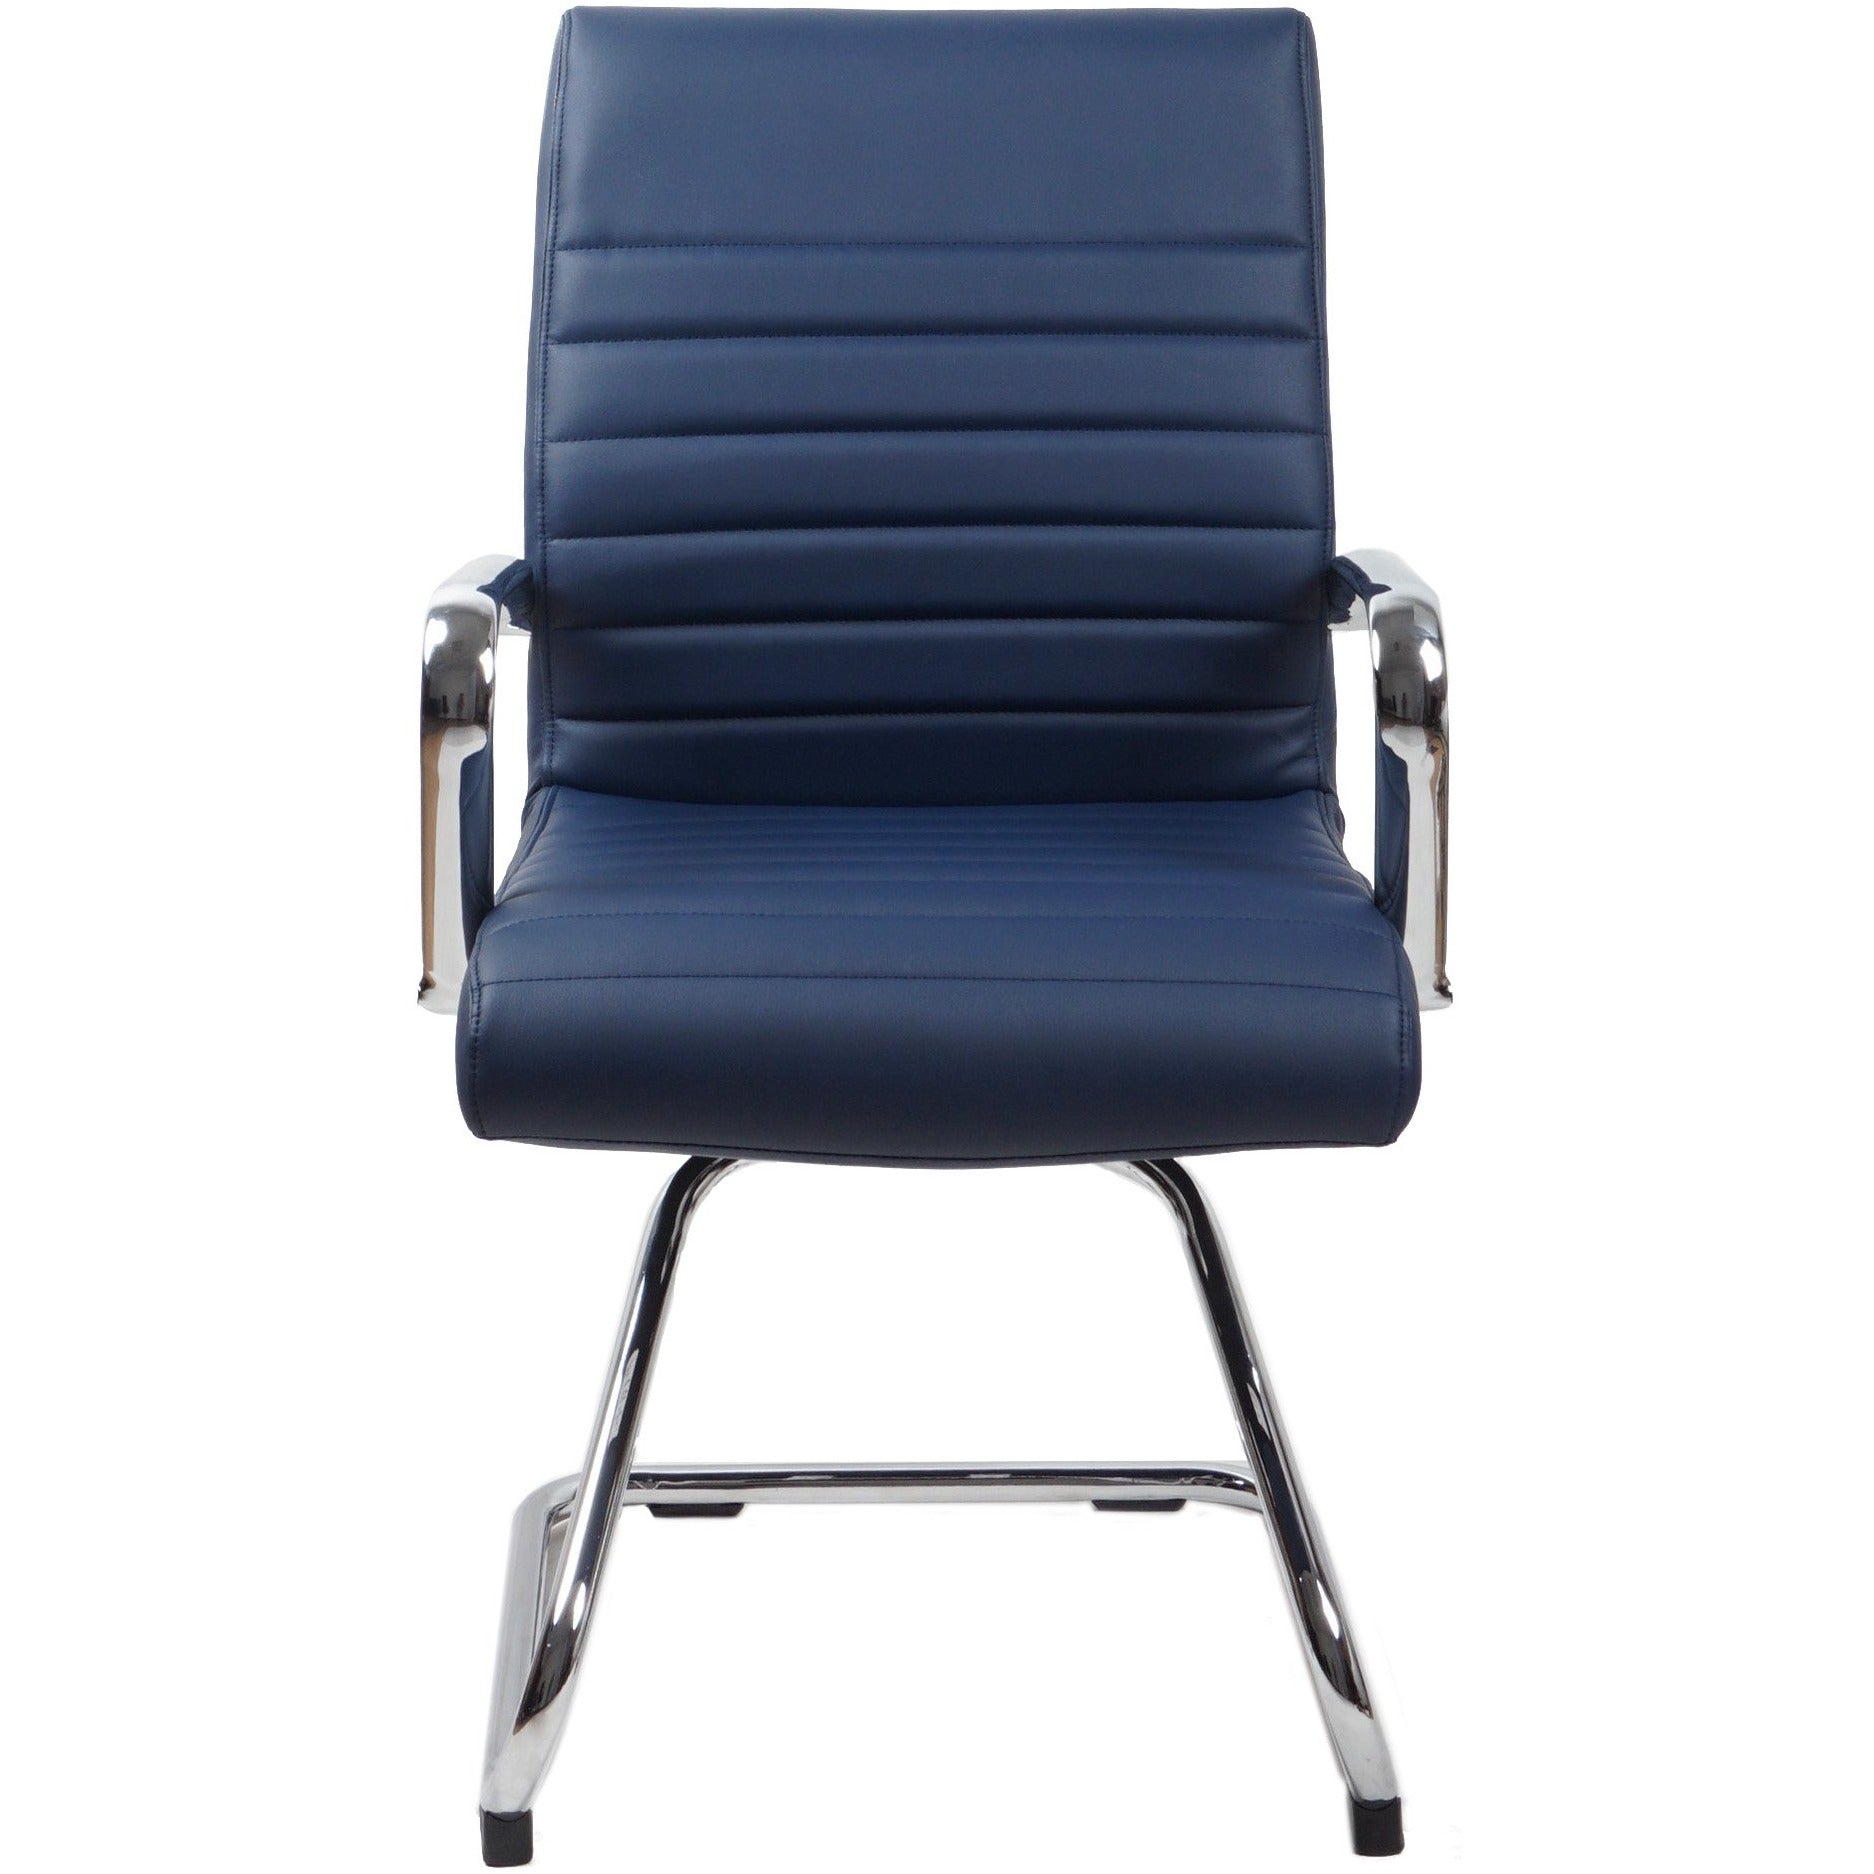 RealBiz II Modern Comfort Series Visitor LeatherPro Chair, Midnight Blue